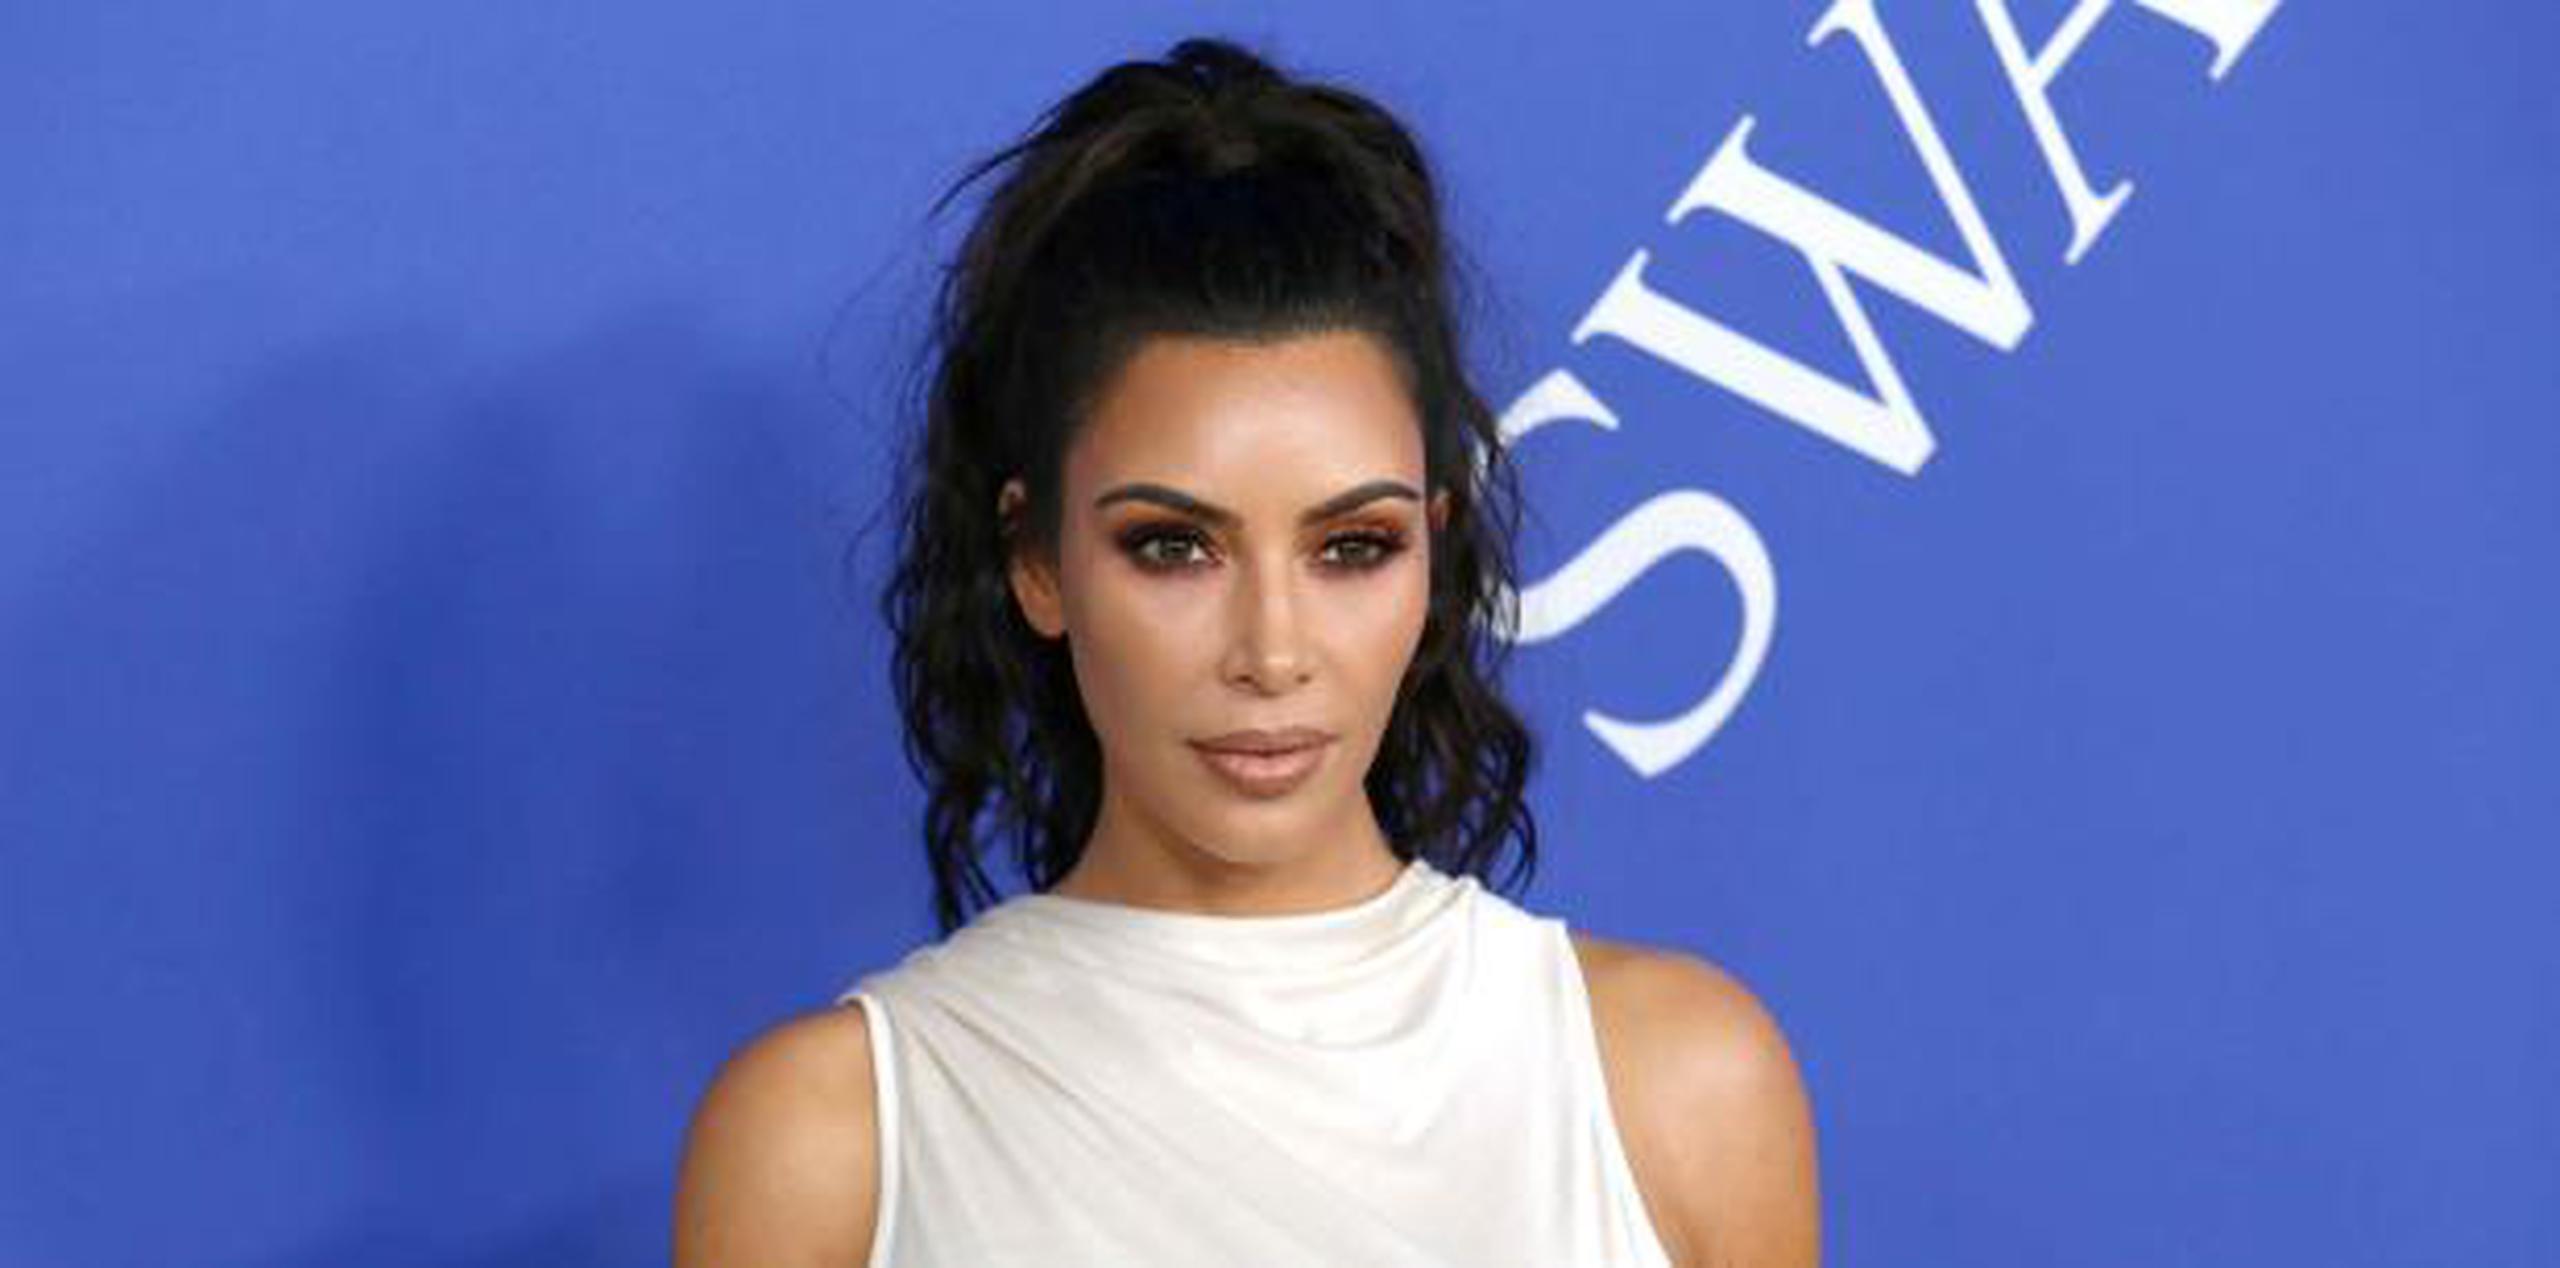 Kim Kardashian West. (Shutterstock)